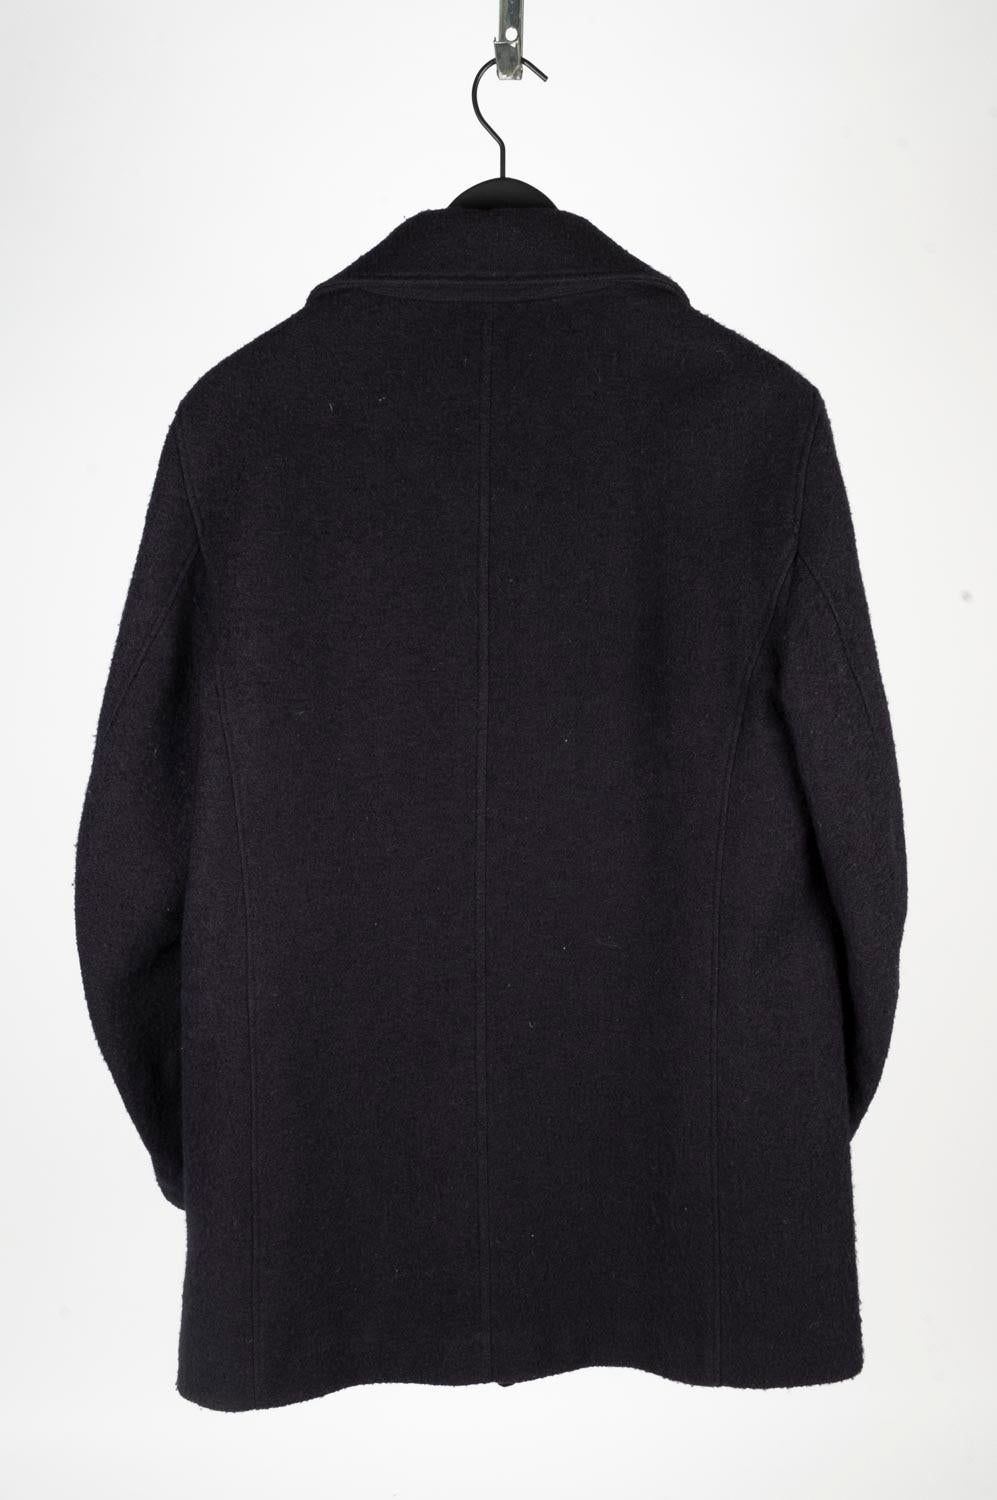  Z Zegna Men Coat Peacoat Jacket Size XL For Sale 1